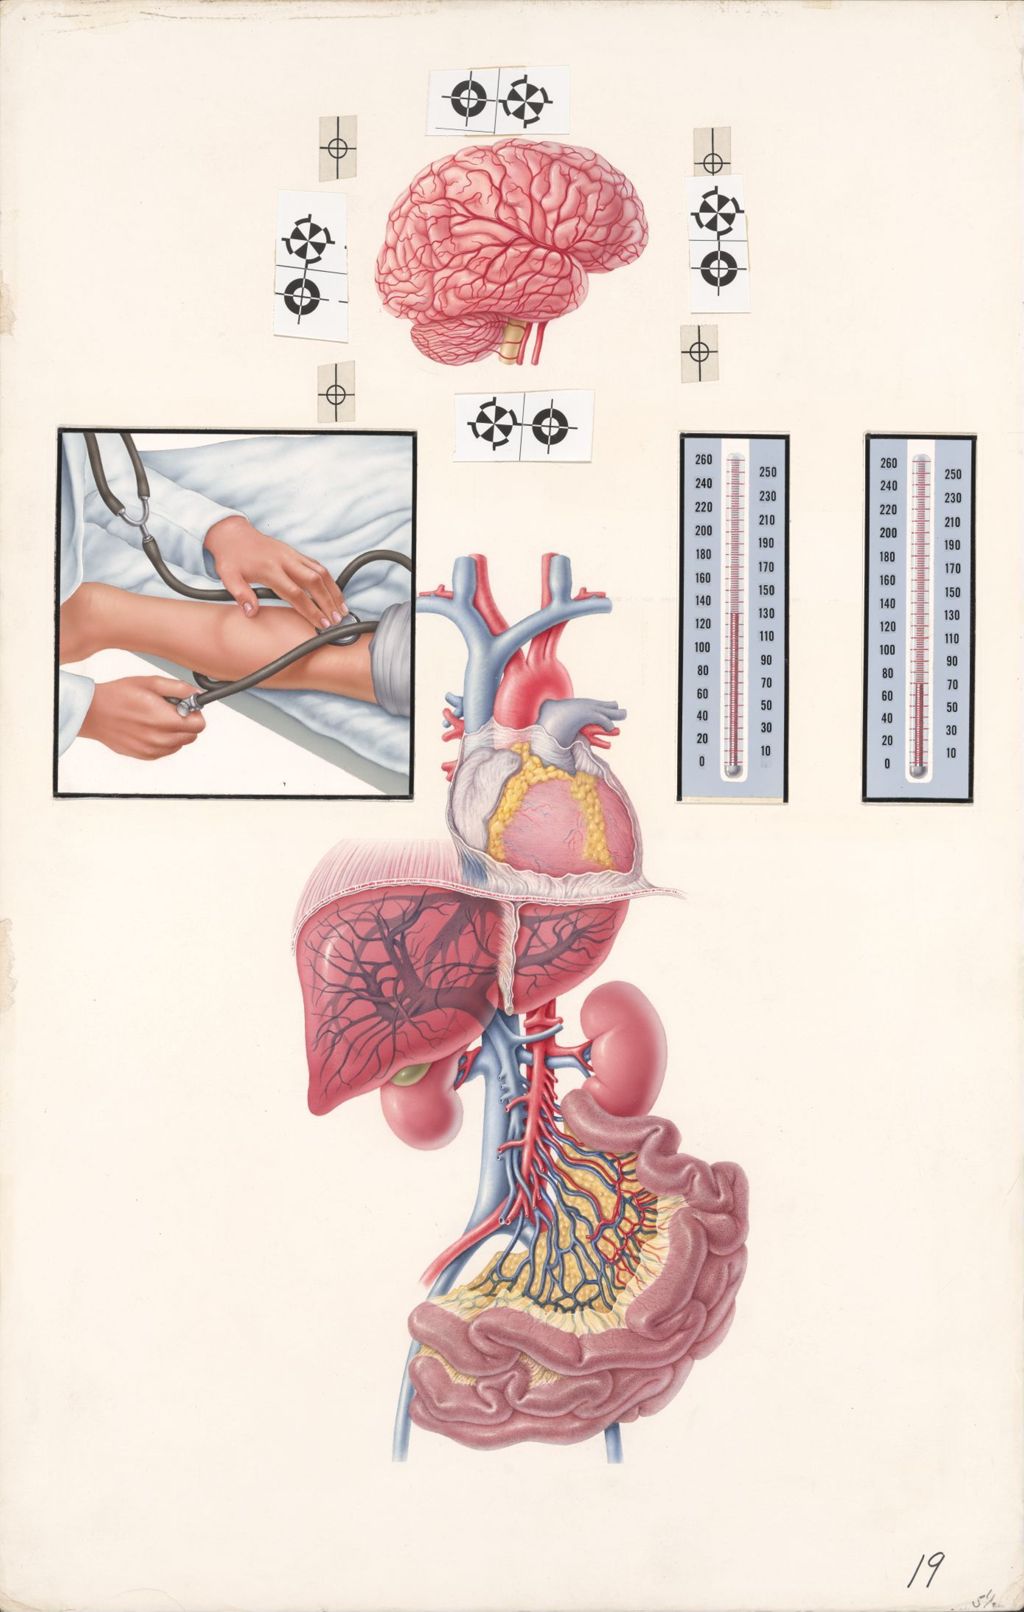 Medical Profiles, Aldomet, Blood Flow to Vital Organs in Hypotension, Plate I